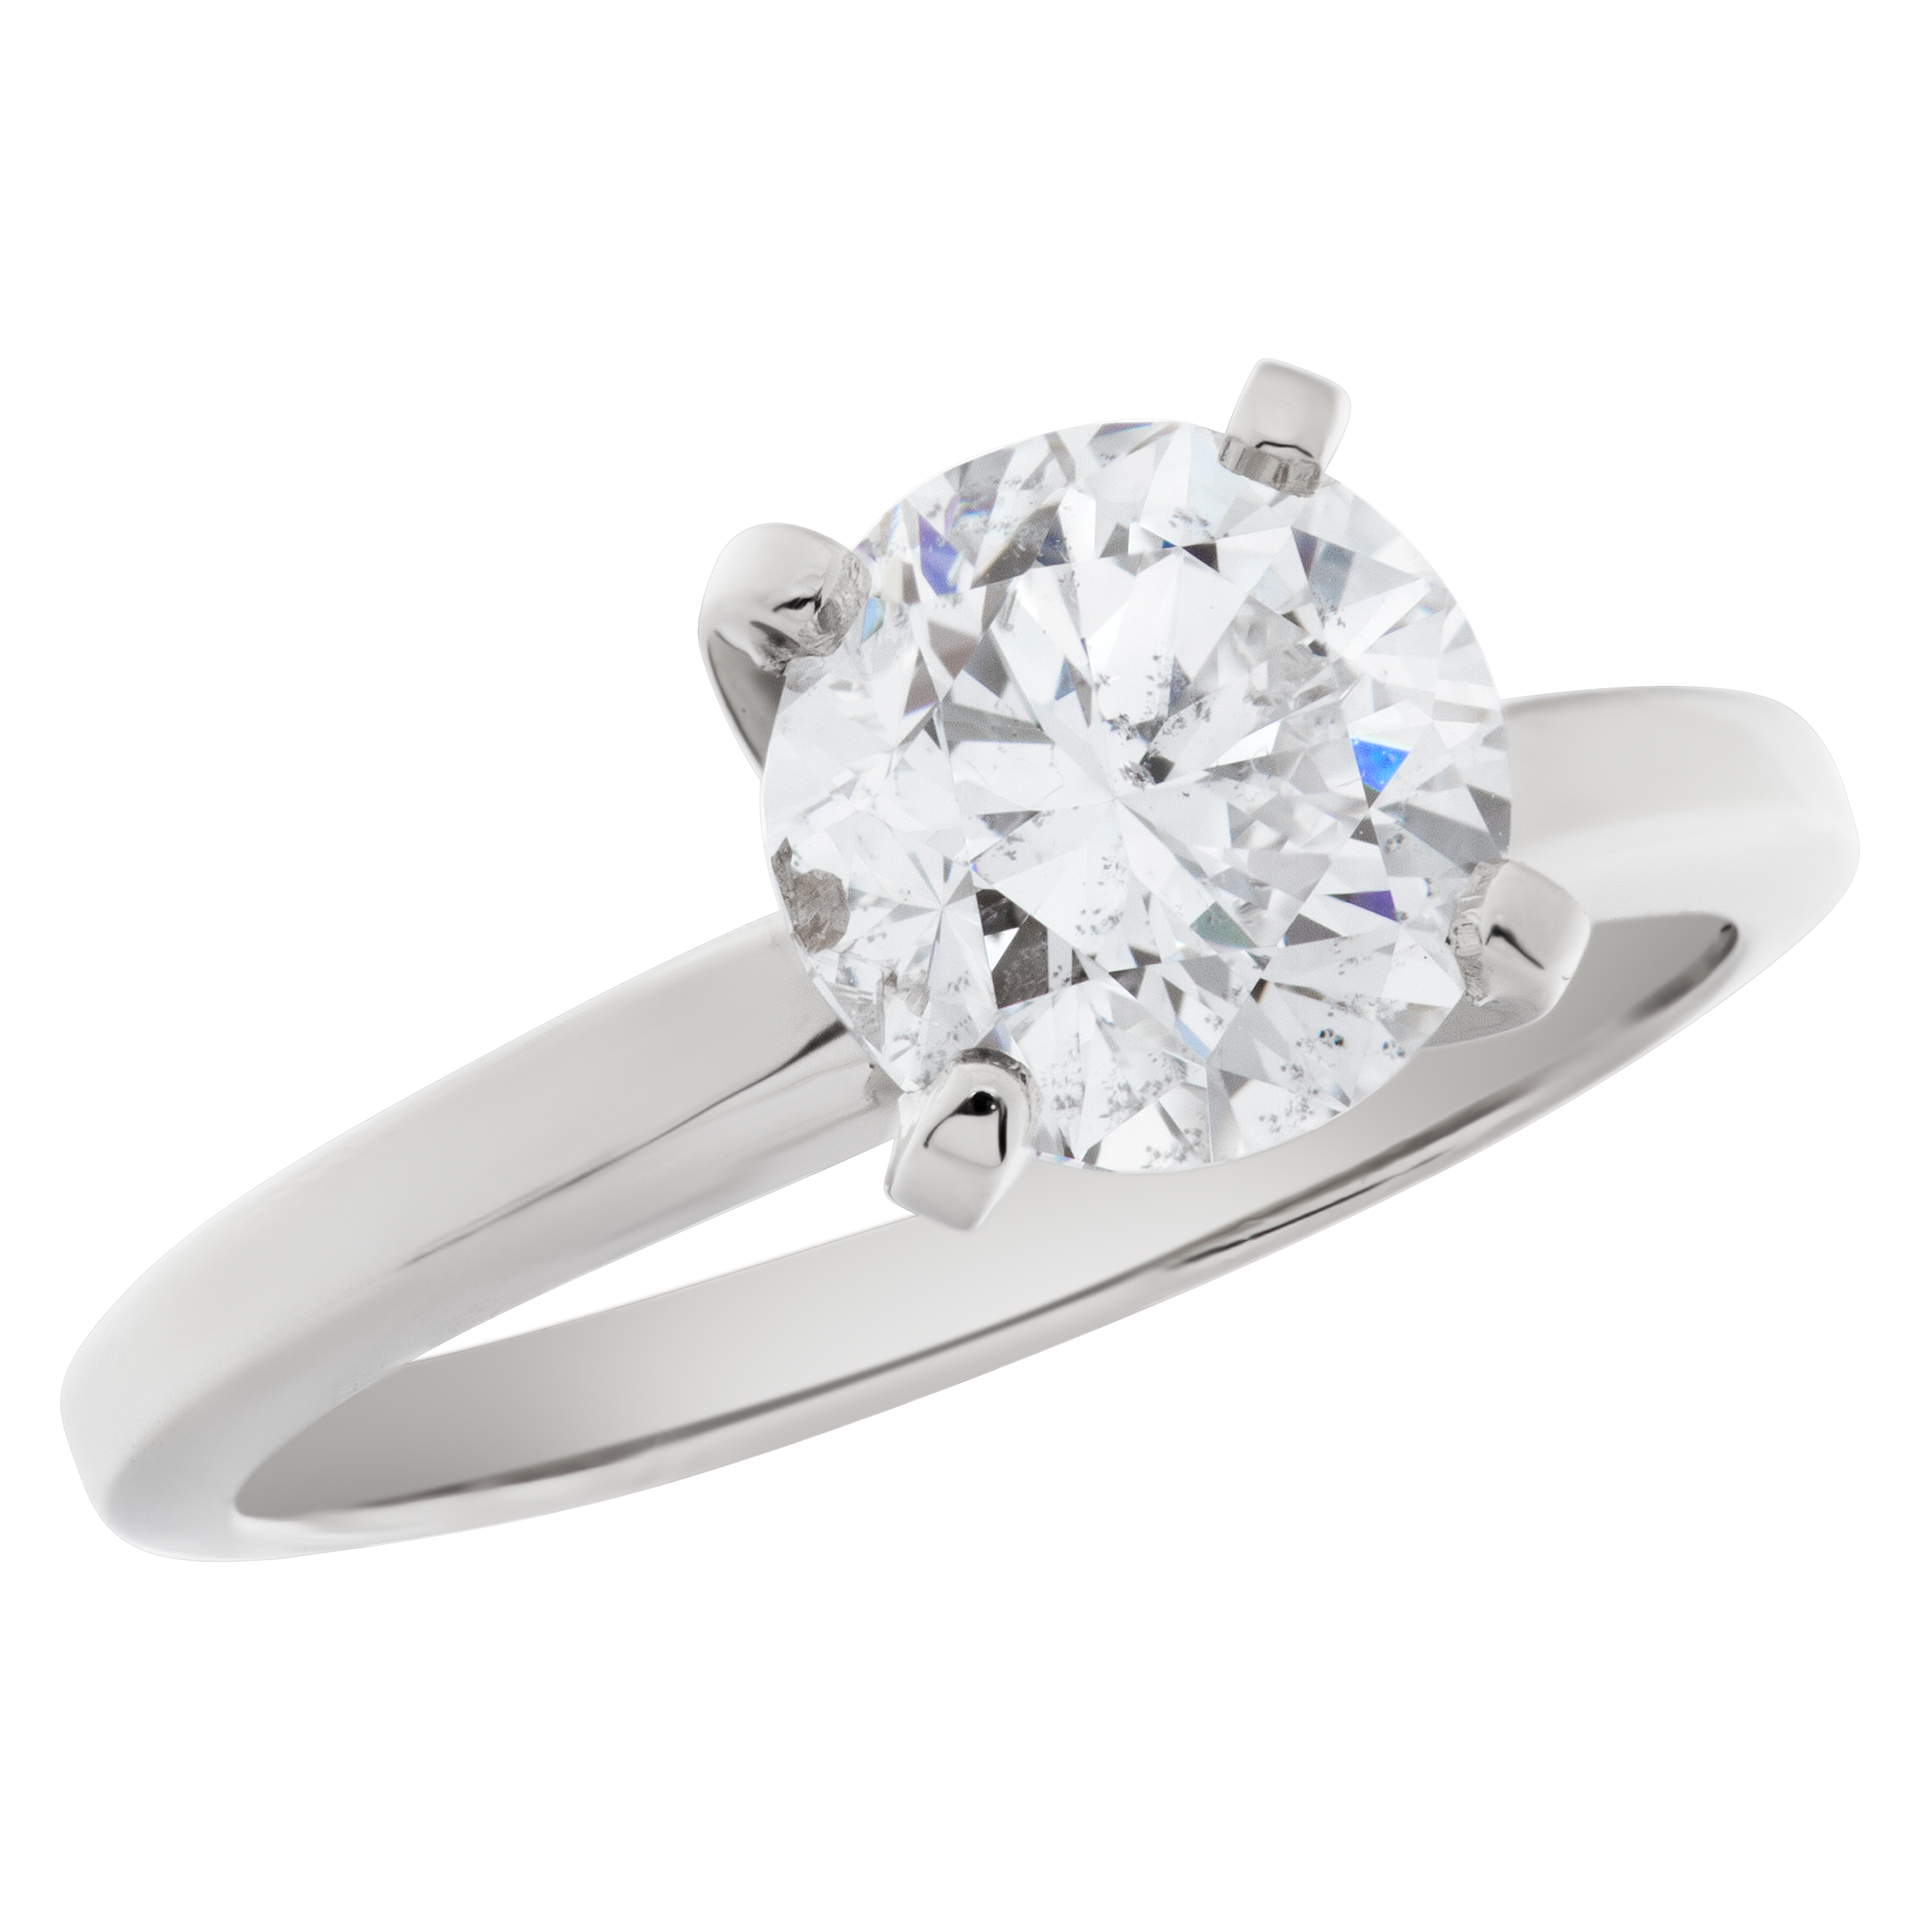 GIA certified round brilliant diamond 1.51 carat (G color, I1 clarity) image 3